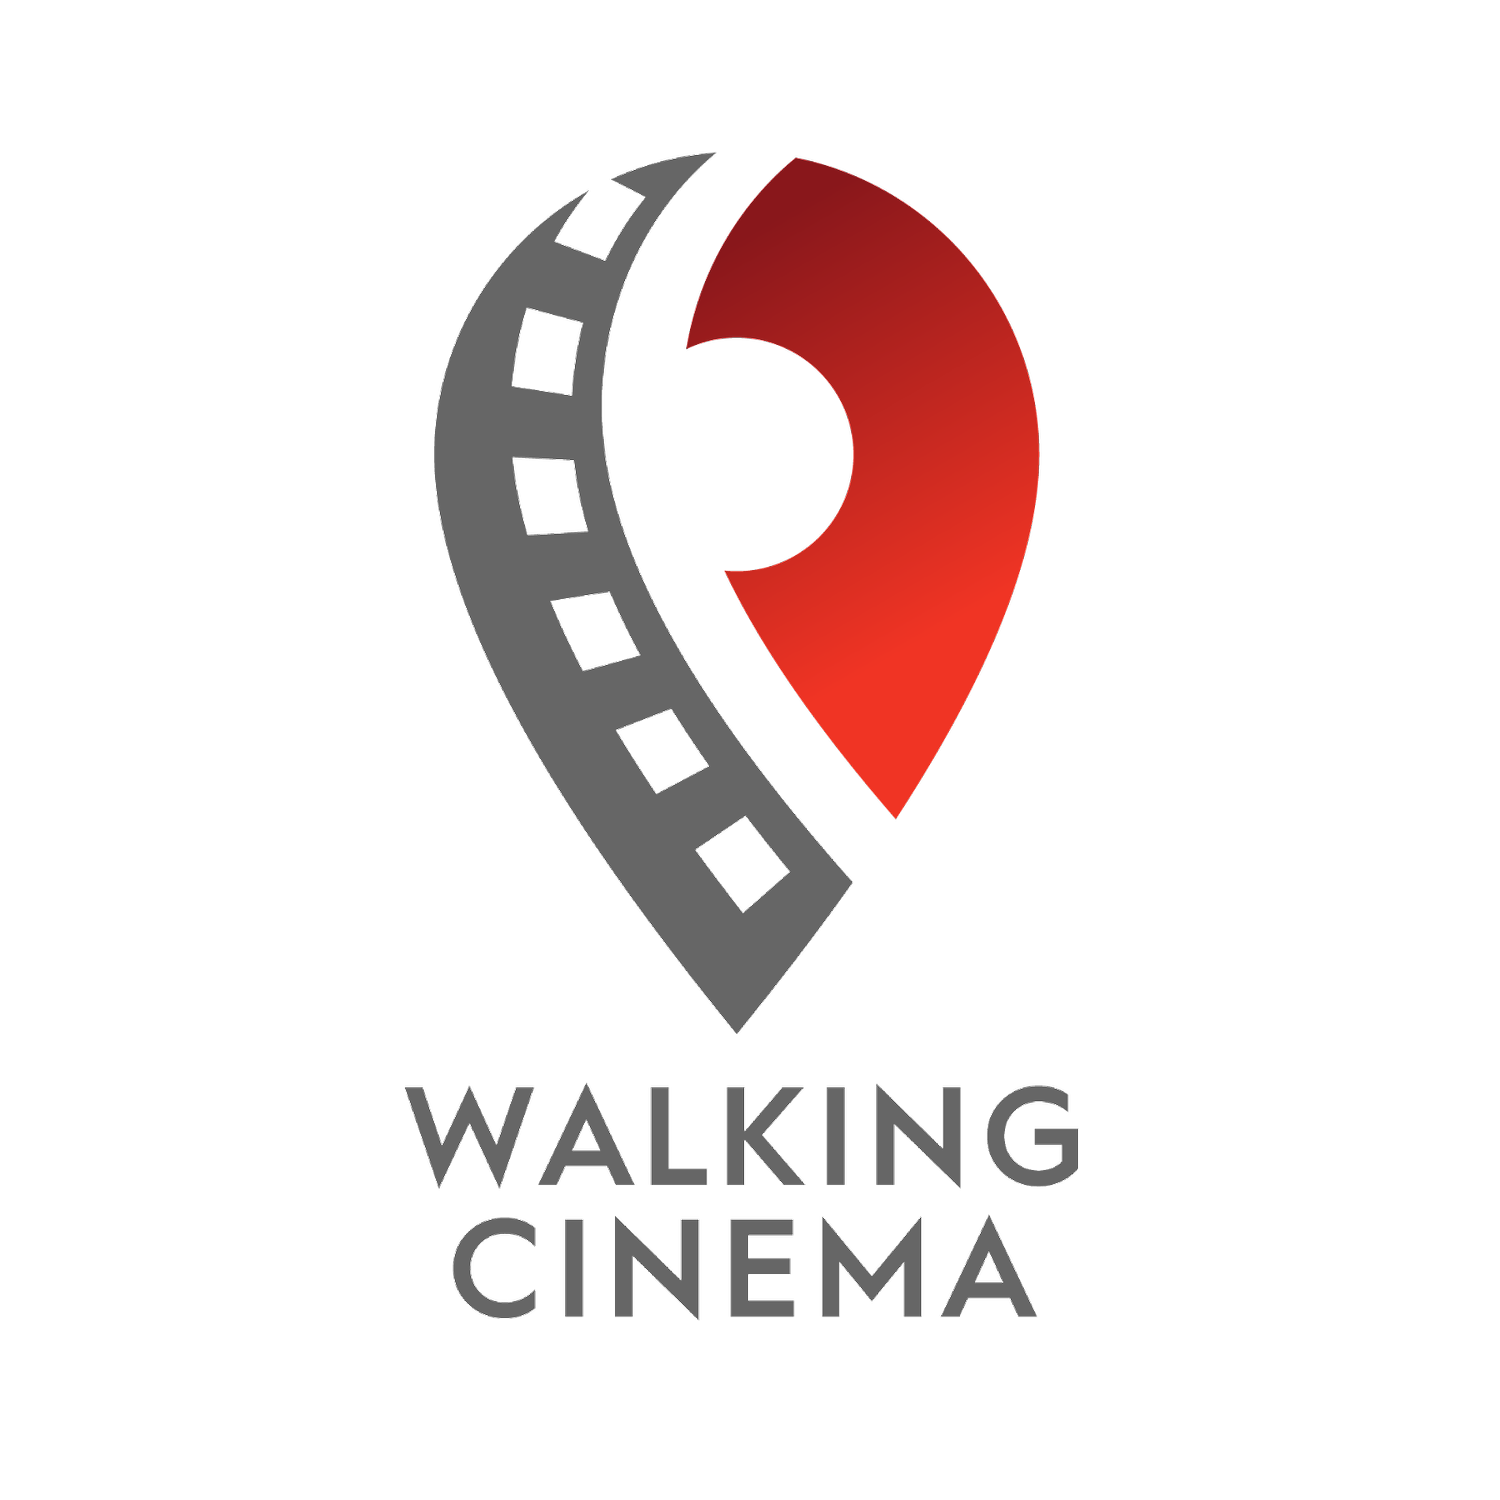 Walking Cinema